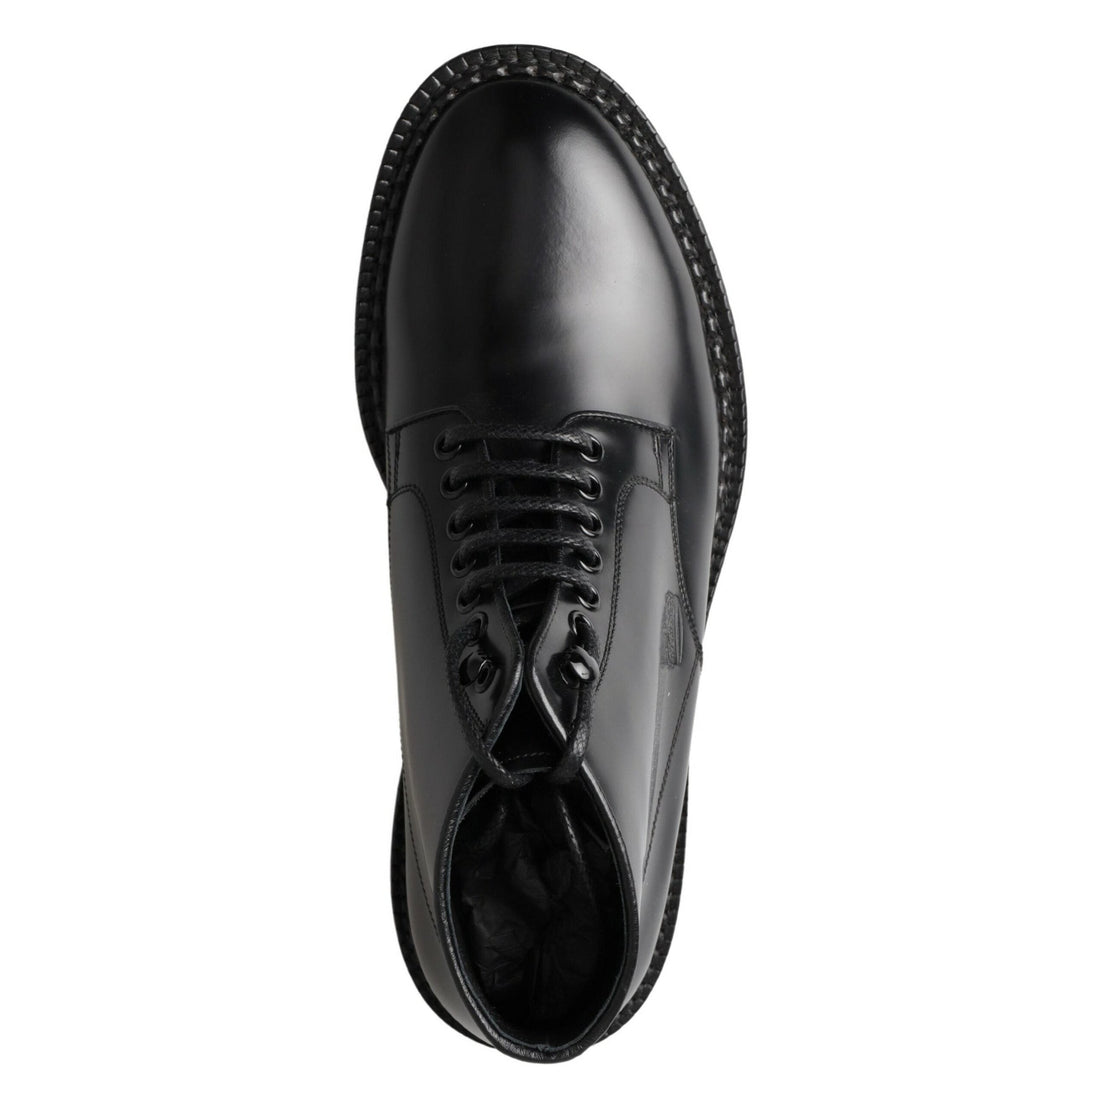 Dolce & Gabbana Elegant Black Leather Men's Boots